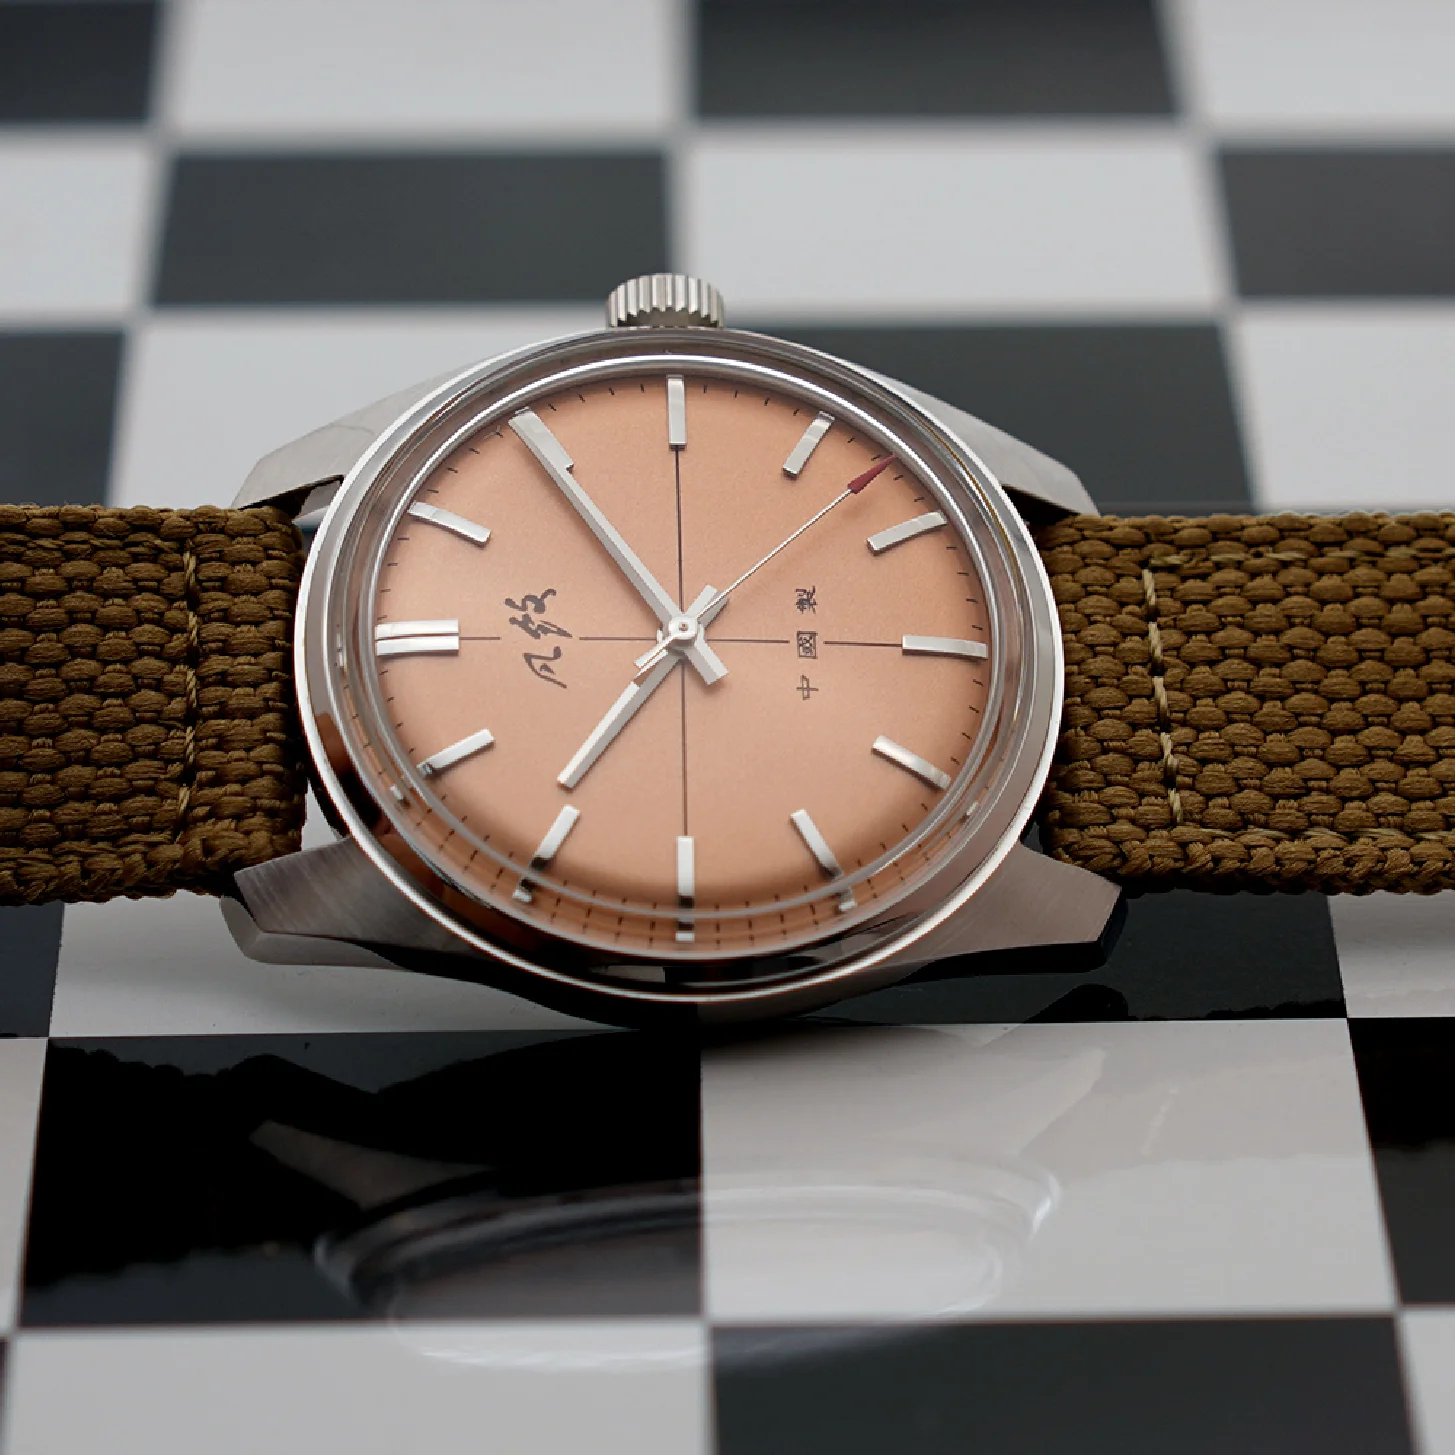 

Merkur Watch Salmon Dial Watch Vintage Casual Dress Watches Handwind Mechanical Watch for Men Relogio Masculino